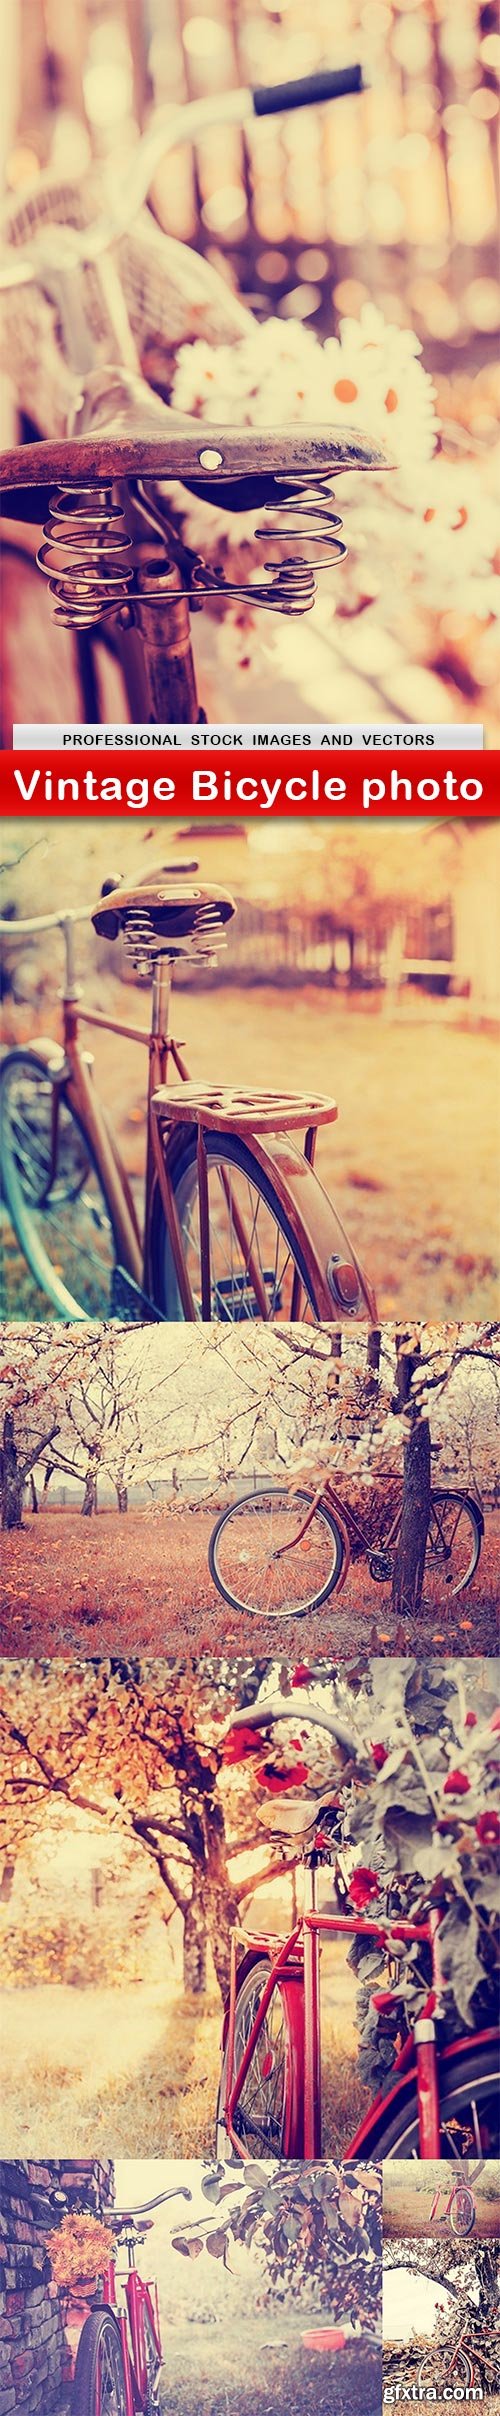 Vintage Bicycle photo - 7 UHQ JPEG